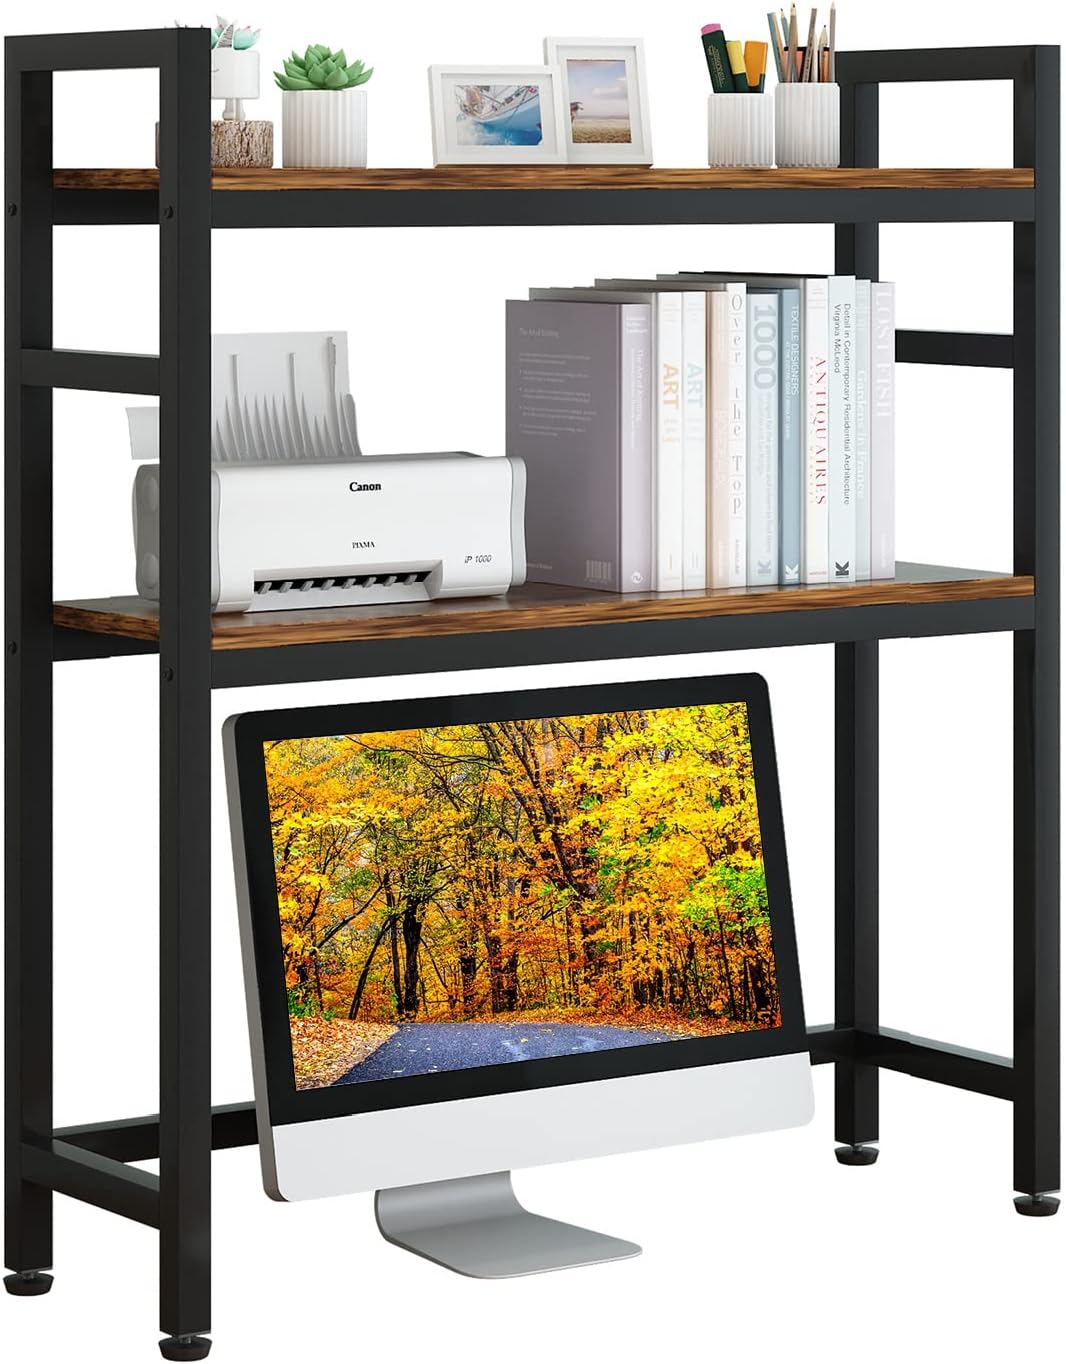 Fitueyes Multipurpose Desk Storage Organizer Adjustable Display Shelf Bookshelf 